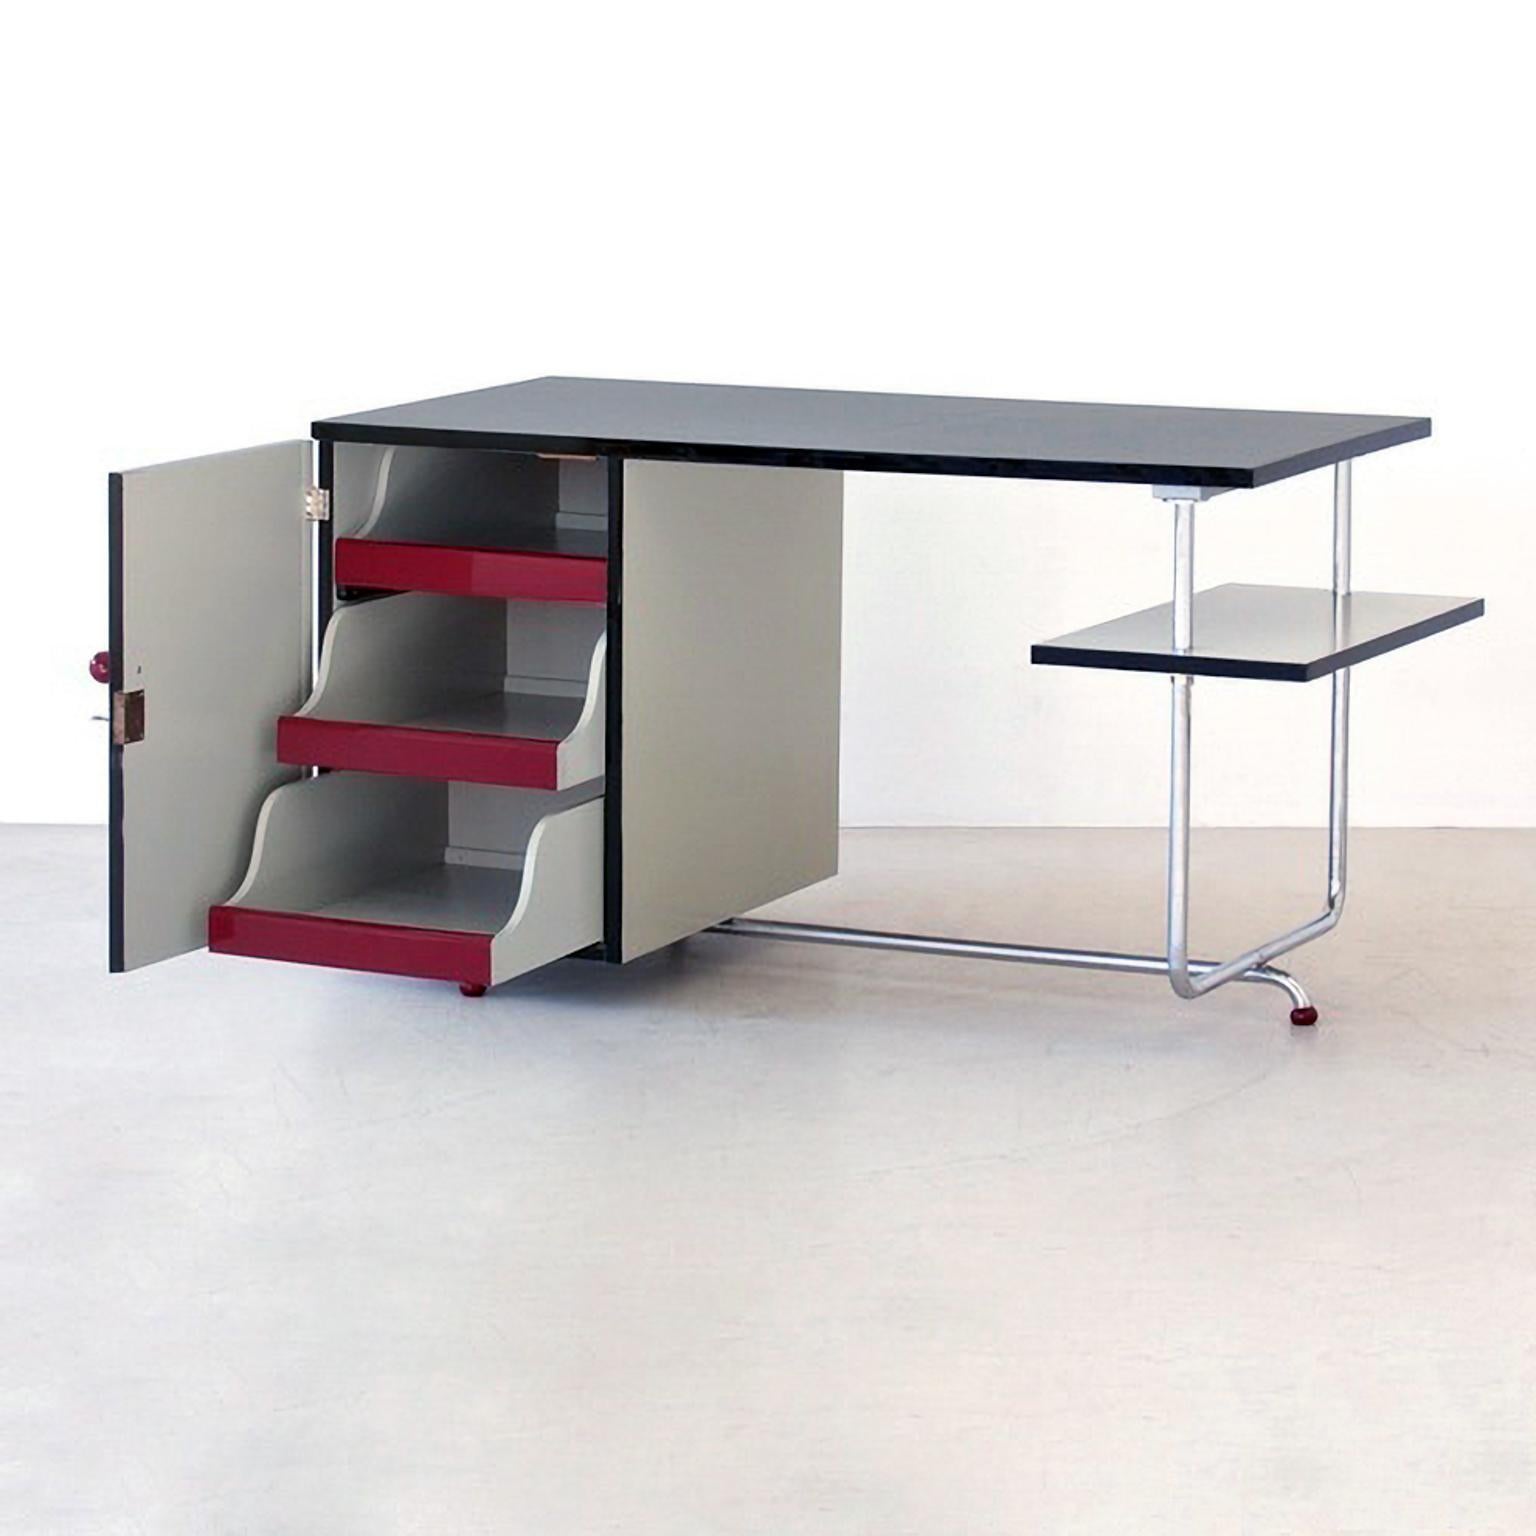 Painted Modernist Tubular Steel Desk by Jindrich Halabala, Chromed Metal, Lacquered Wood For Sale